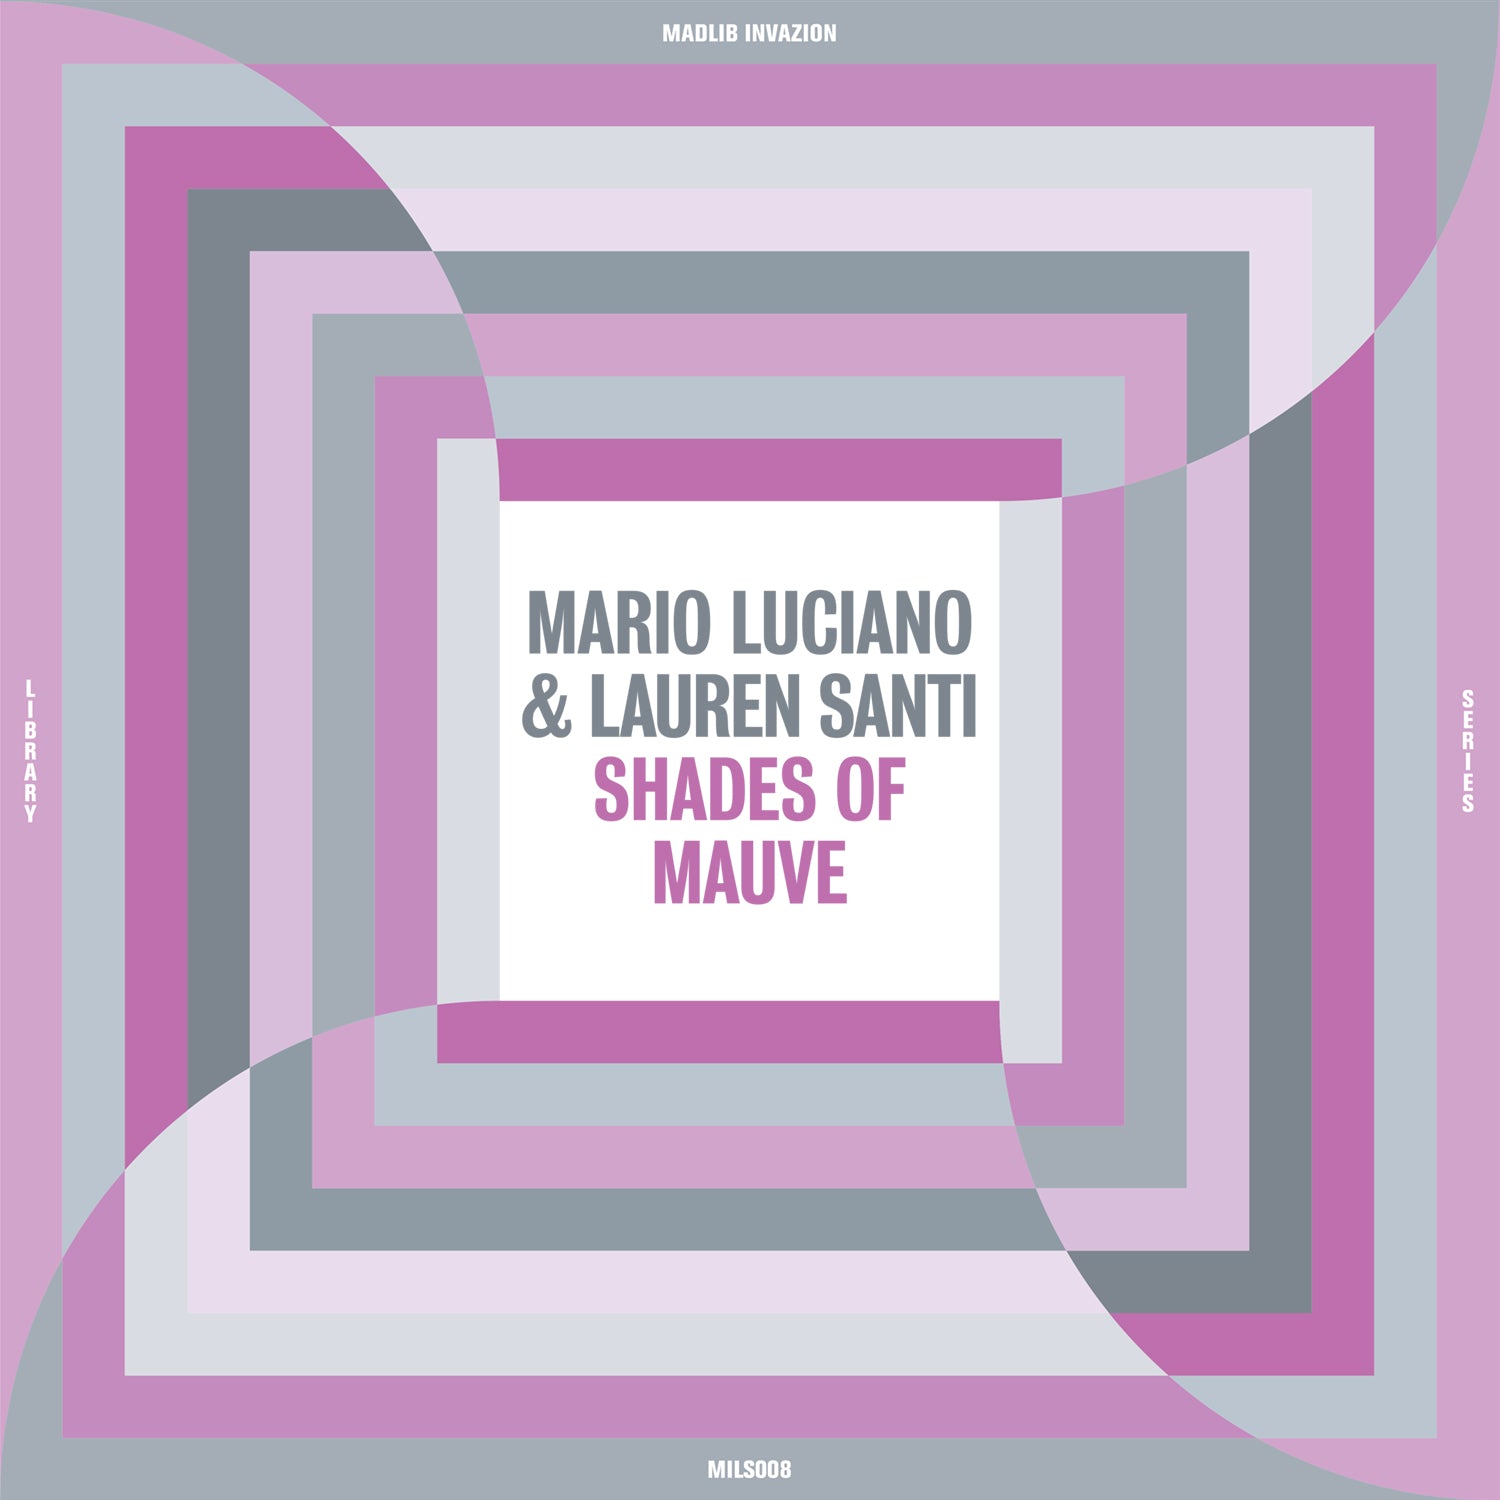 Mario Luciano & Lauren Santi - Shades Of Mauve (Madlib Invazion Music Library Series #8)